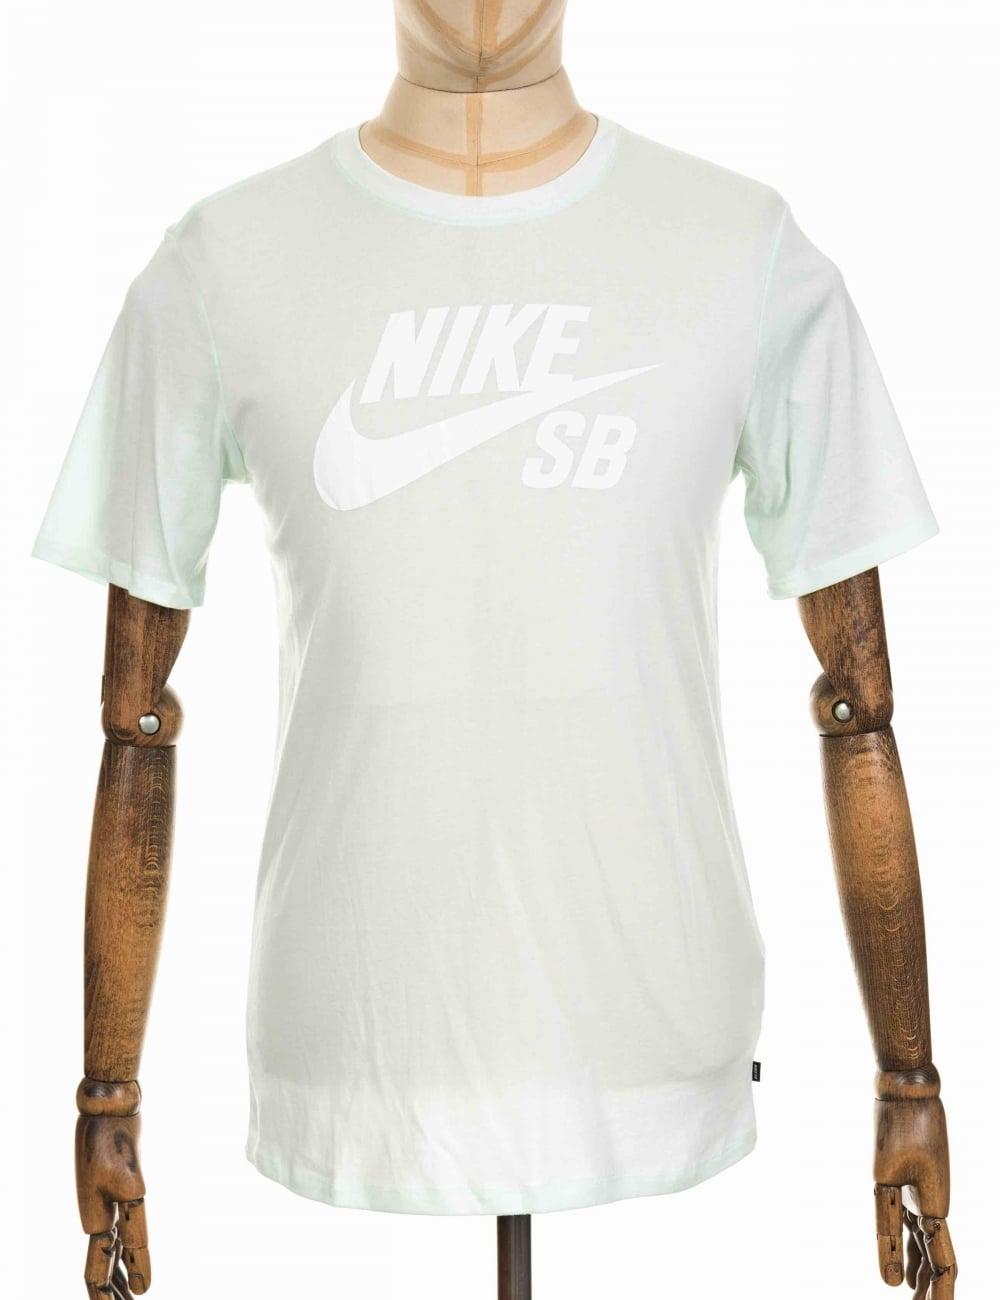 Nike SB Clothing Logo - Nike SB Icon Logo T Shirt Green White From Fat